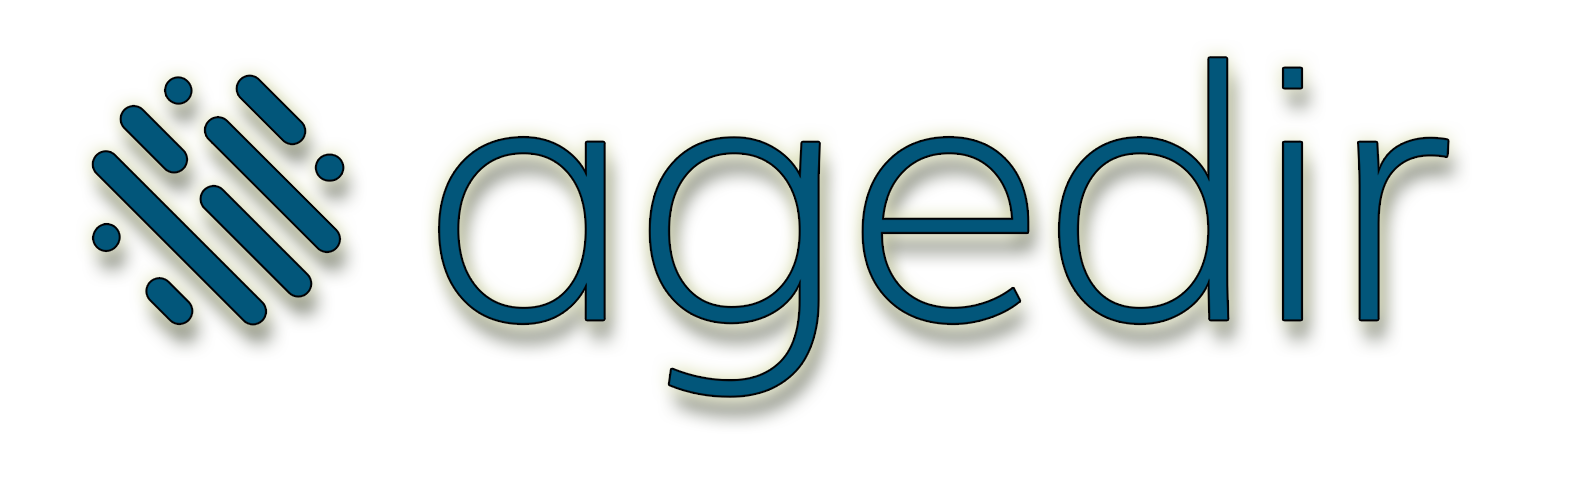 agedir_logo